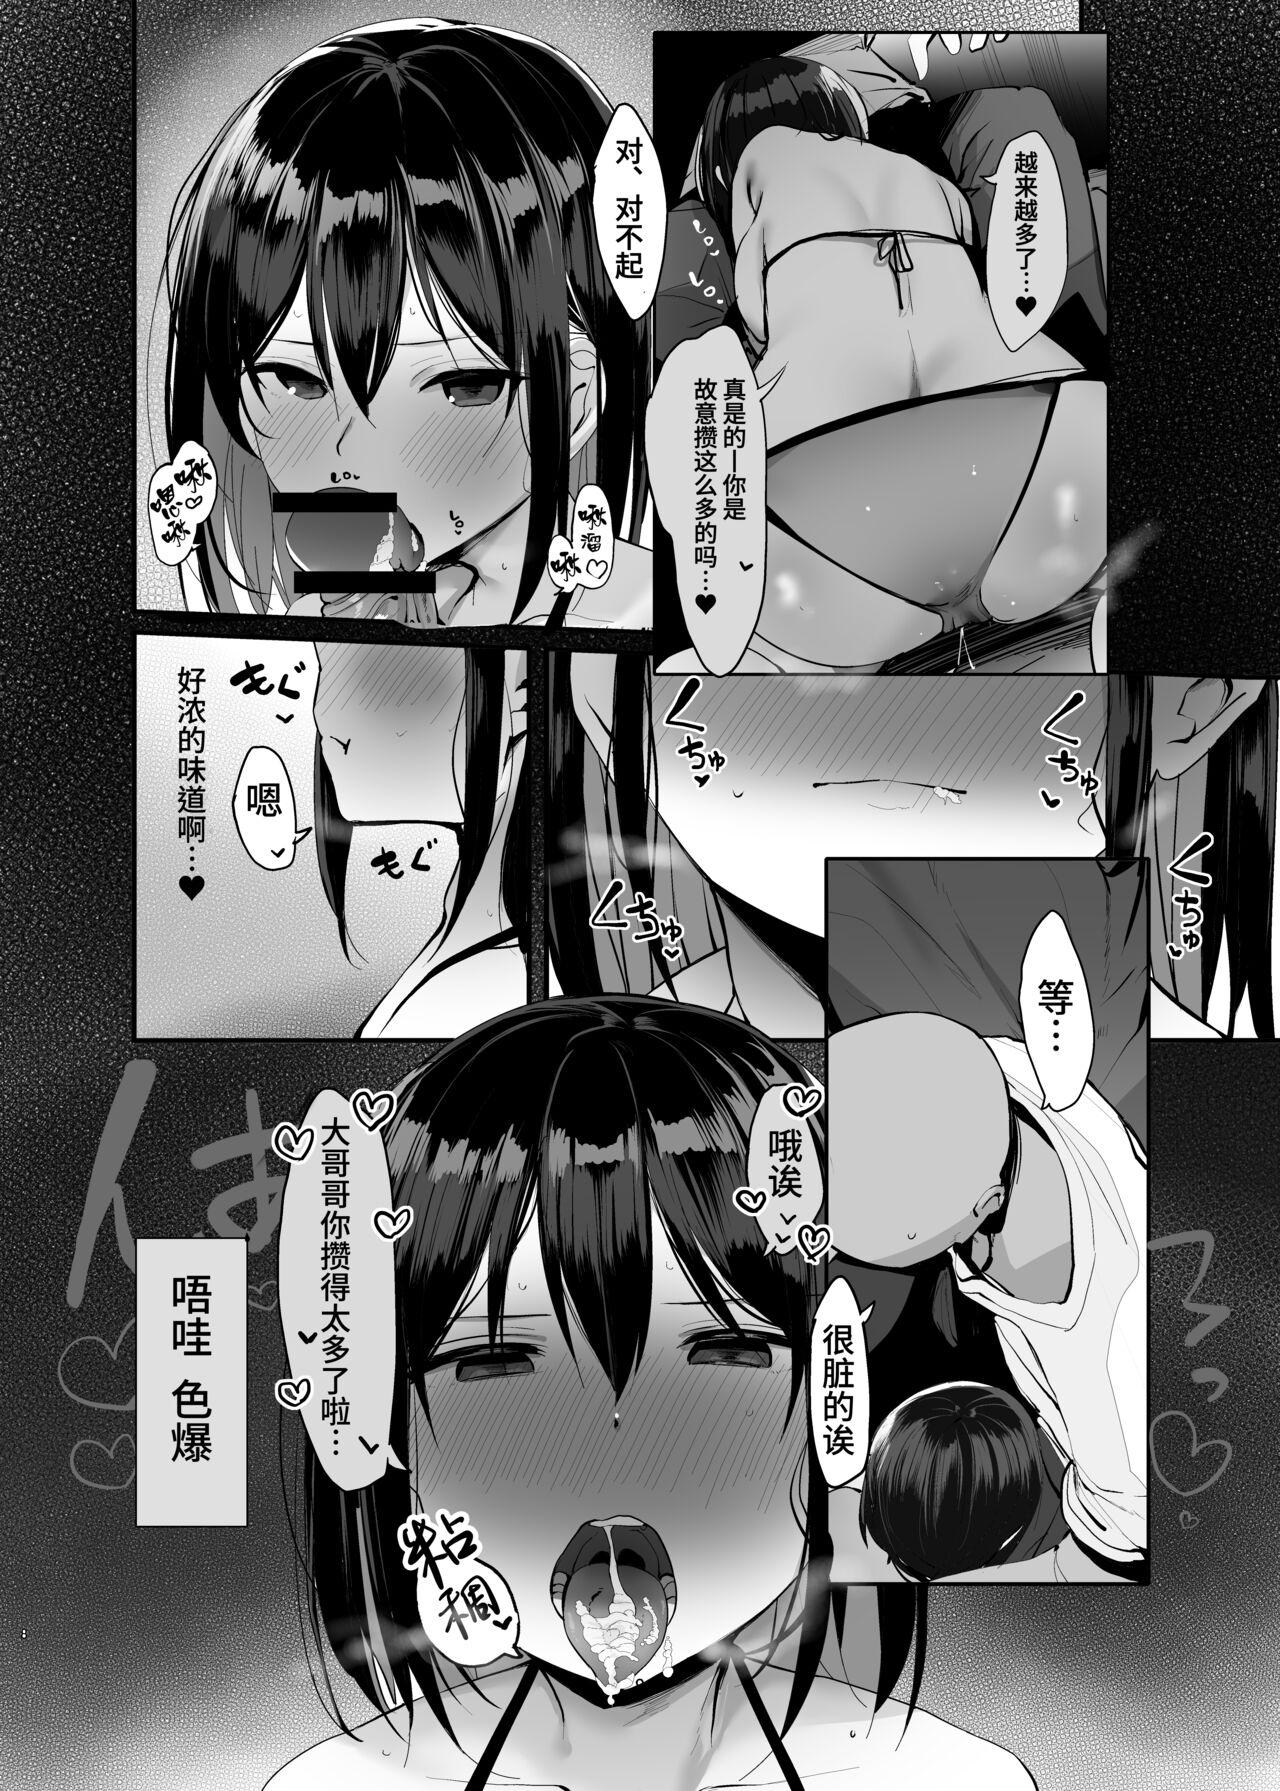 Curious Kyou, Tomete Kuremasen ka? - Can you stay overtoday? - Original Morrita - Page 10